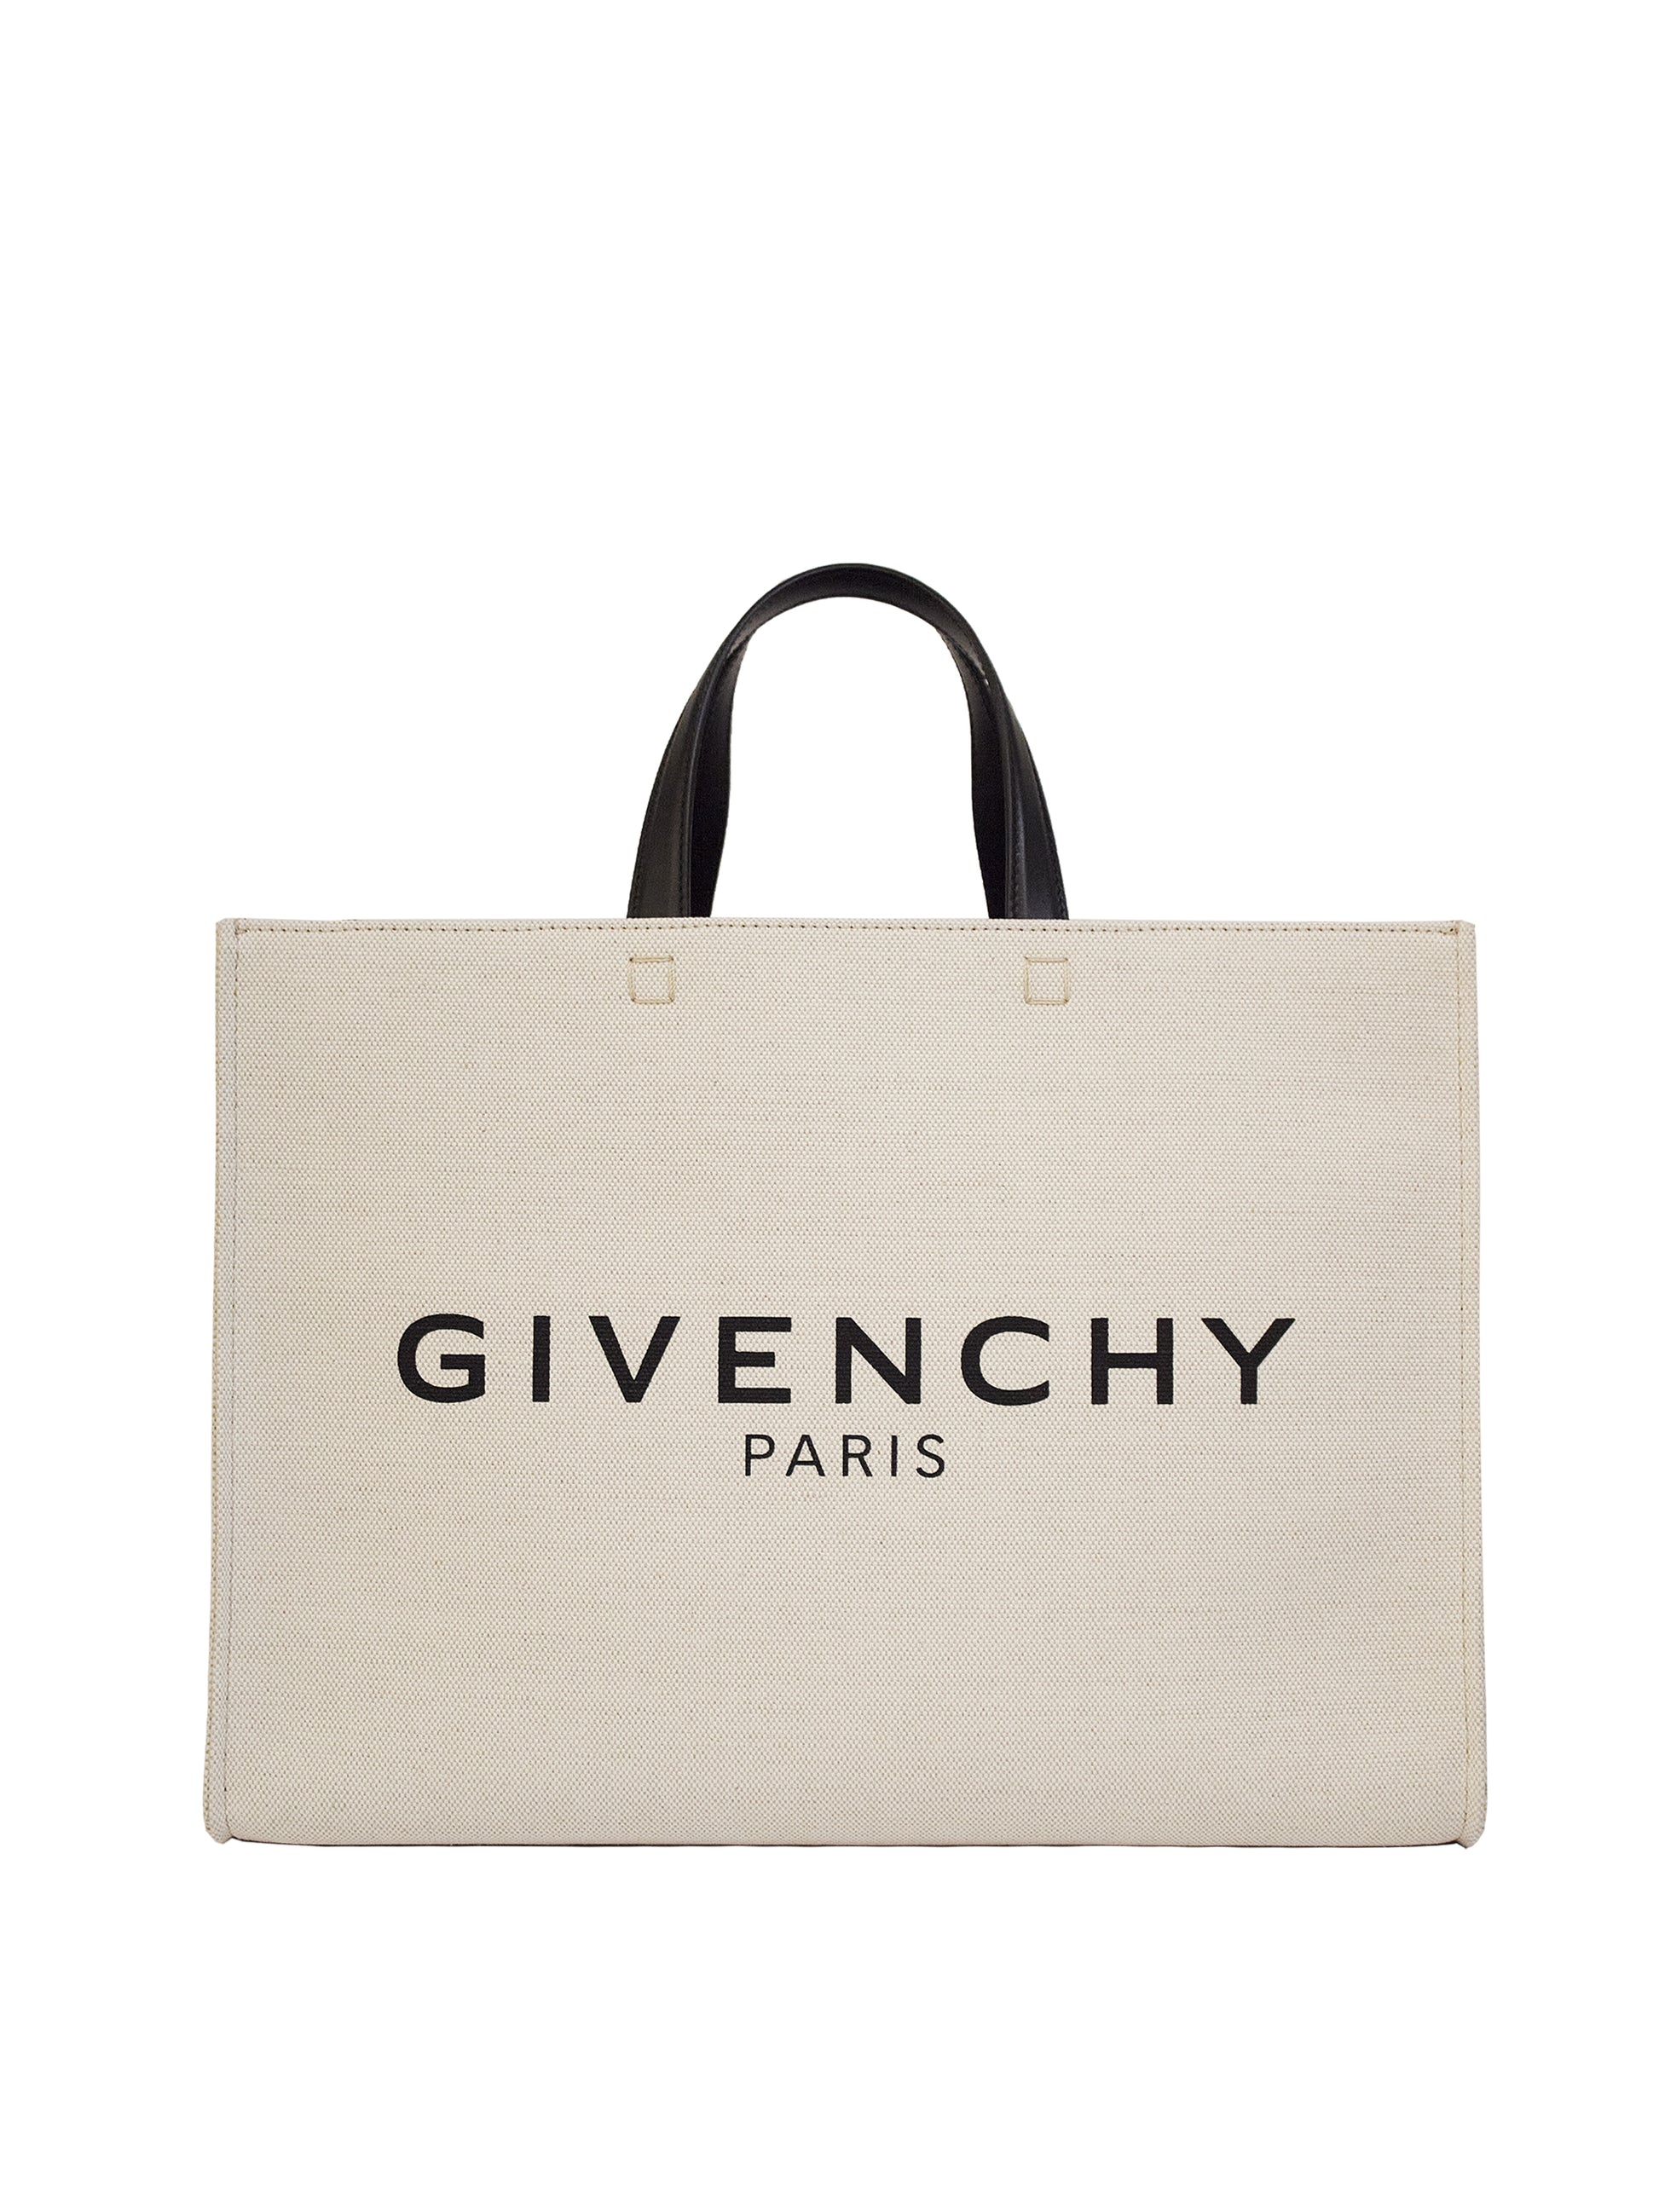 Givenchy Tasche Medium G Tote Shopping Naturfarbe-Schwarz - La Boutique Dresden